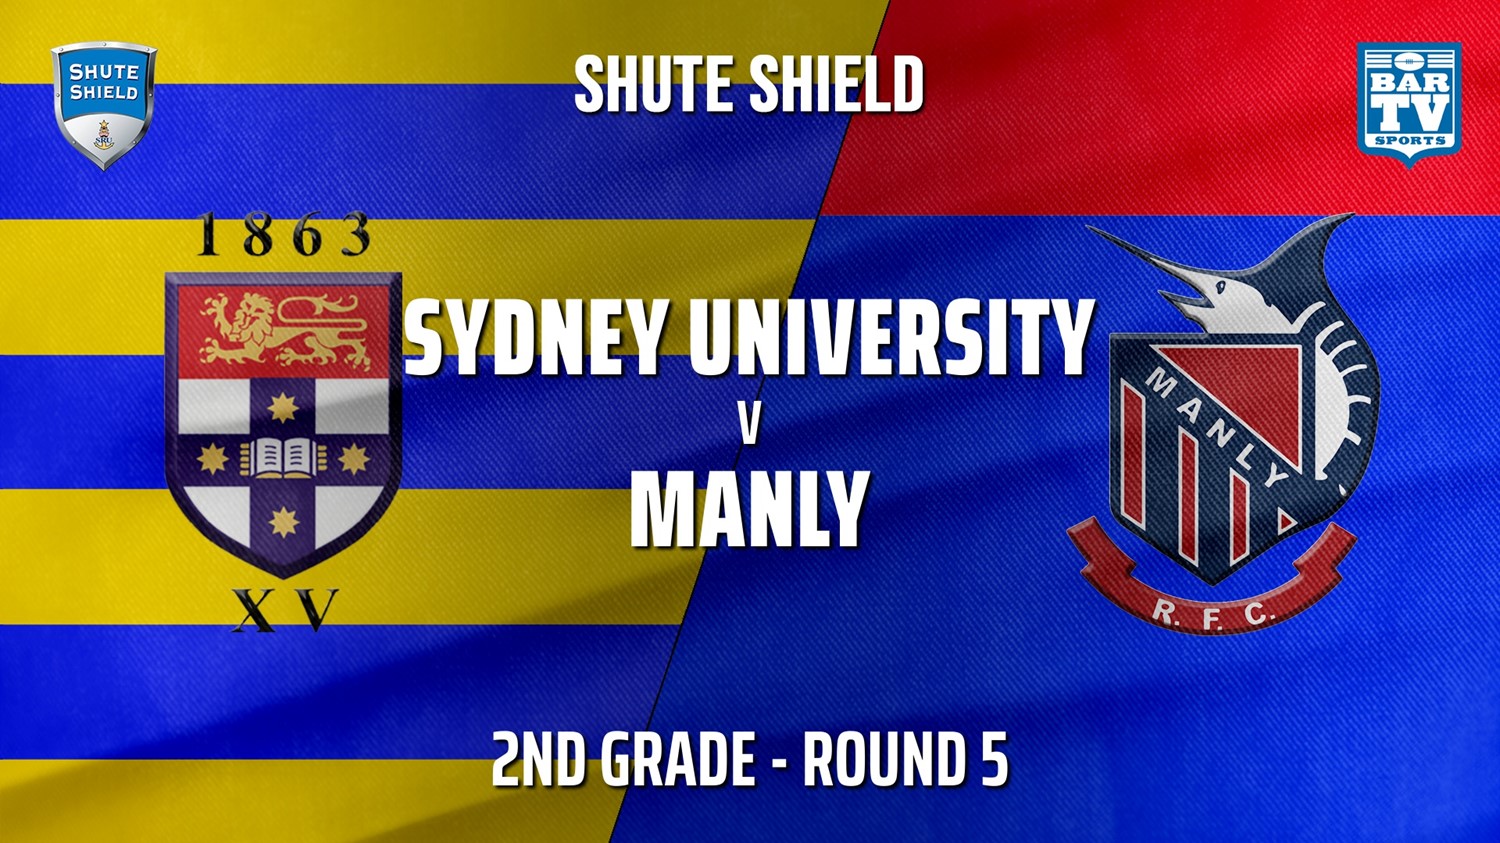 210508-Shute Shield Round 5 - 2nd Grade - Sydney University v Manly Minigame Slate Image